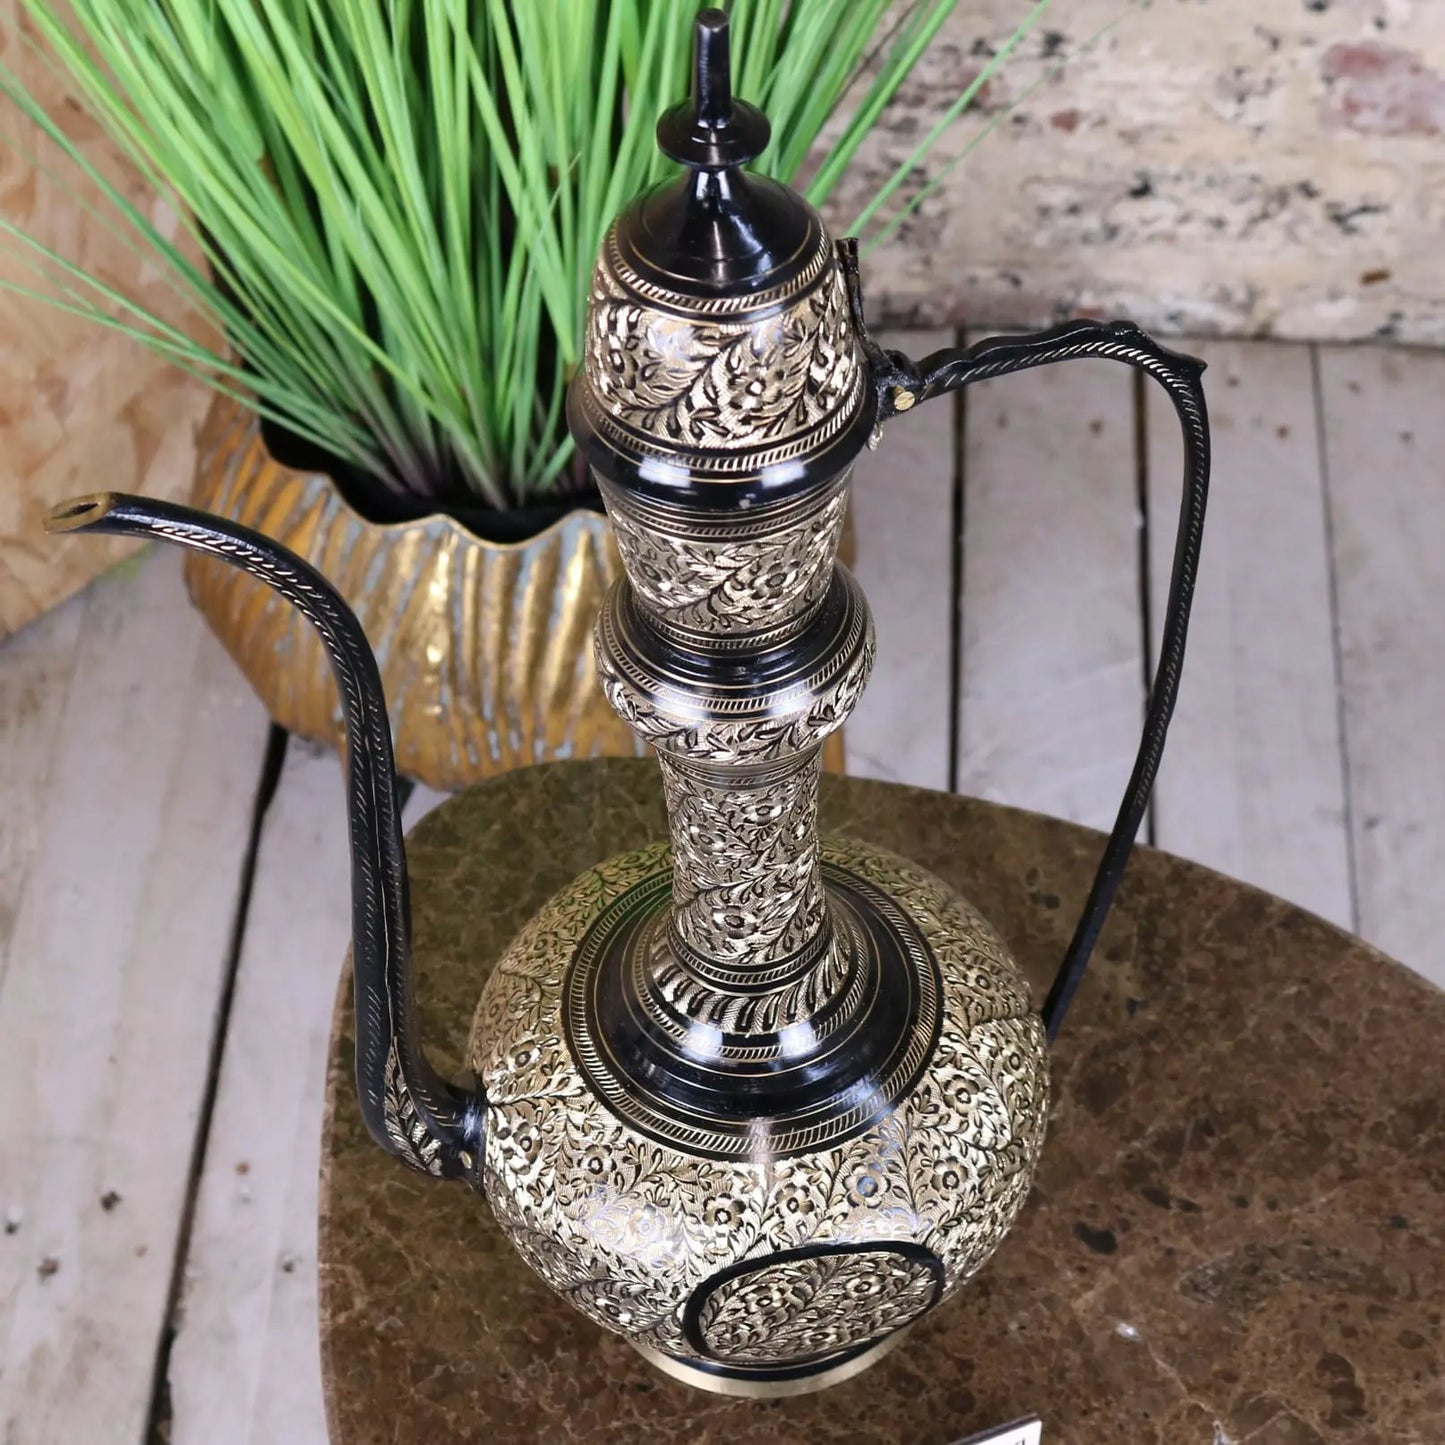 Aravalli Aftaba Brass Arabian Jug Vase Ornament - Angled Top View